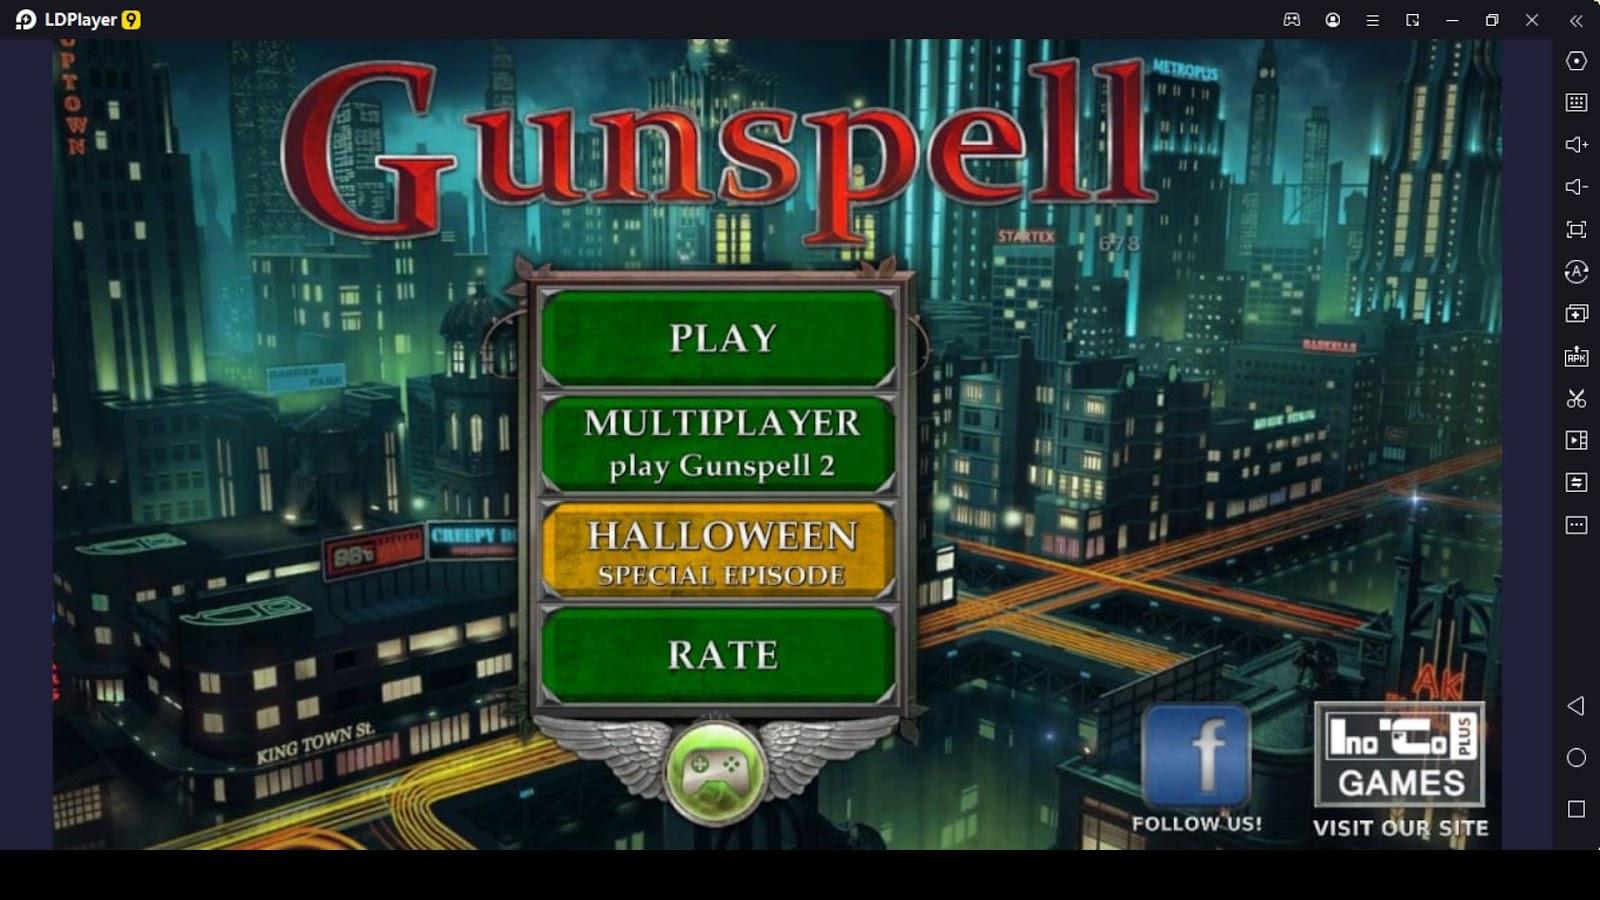 Gunspell - Match 3 Puzzle RPG